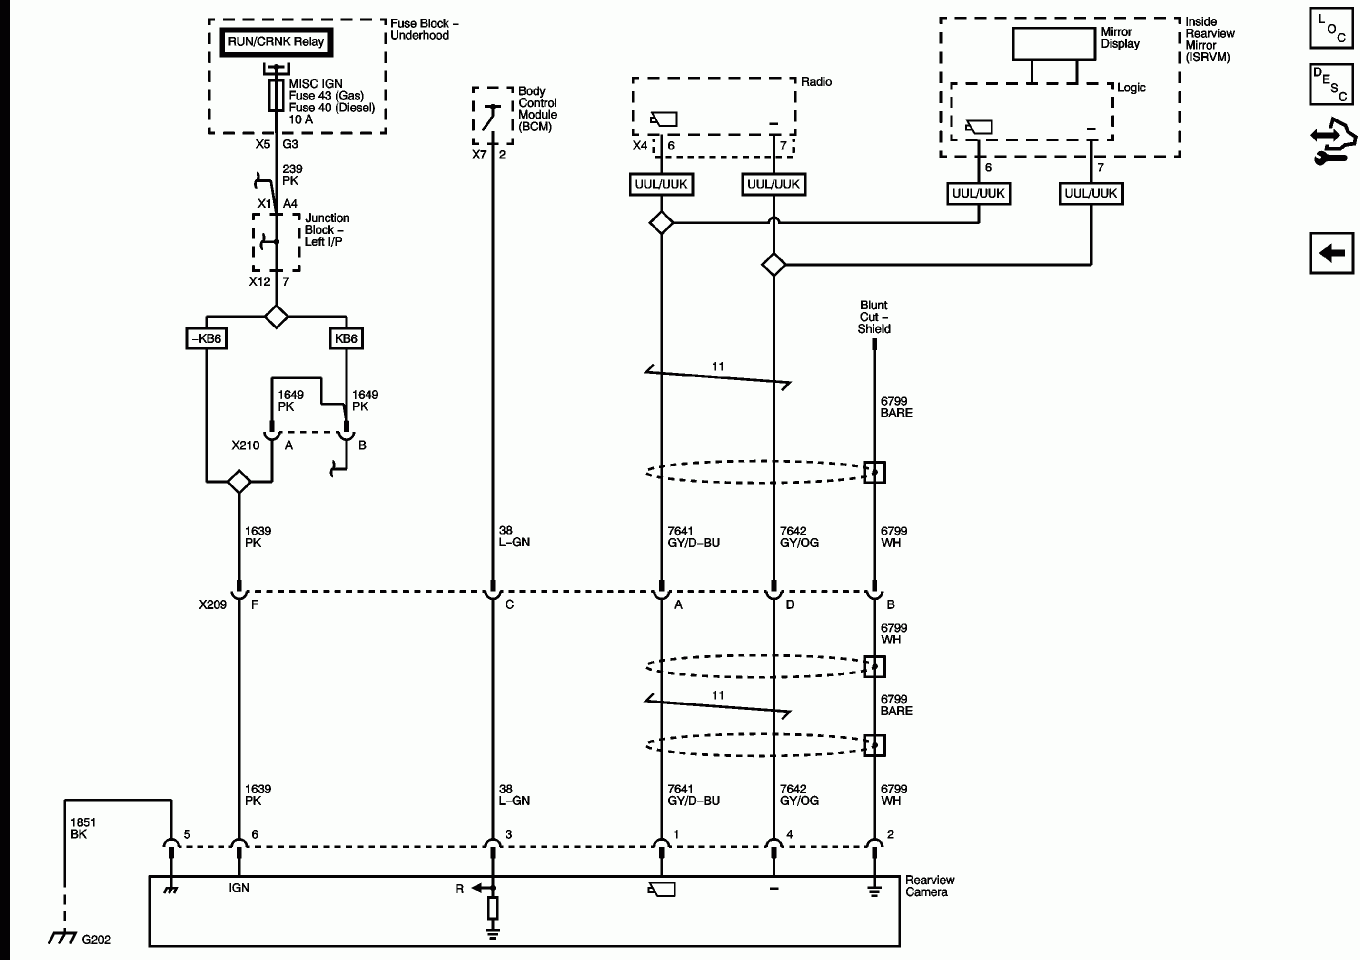 Wiring Diagram For A Tekonsha Trailer Brake Controller